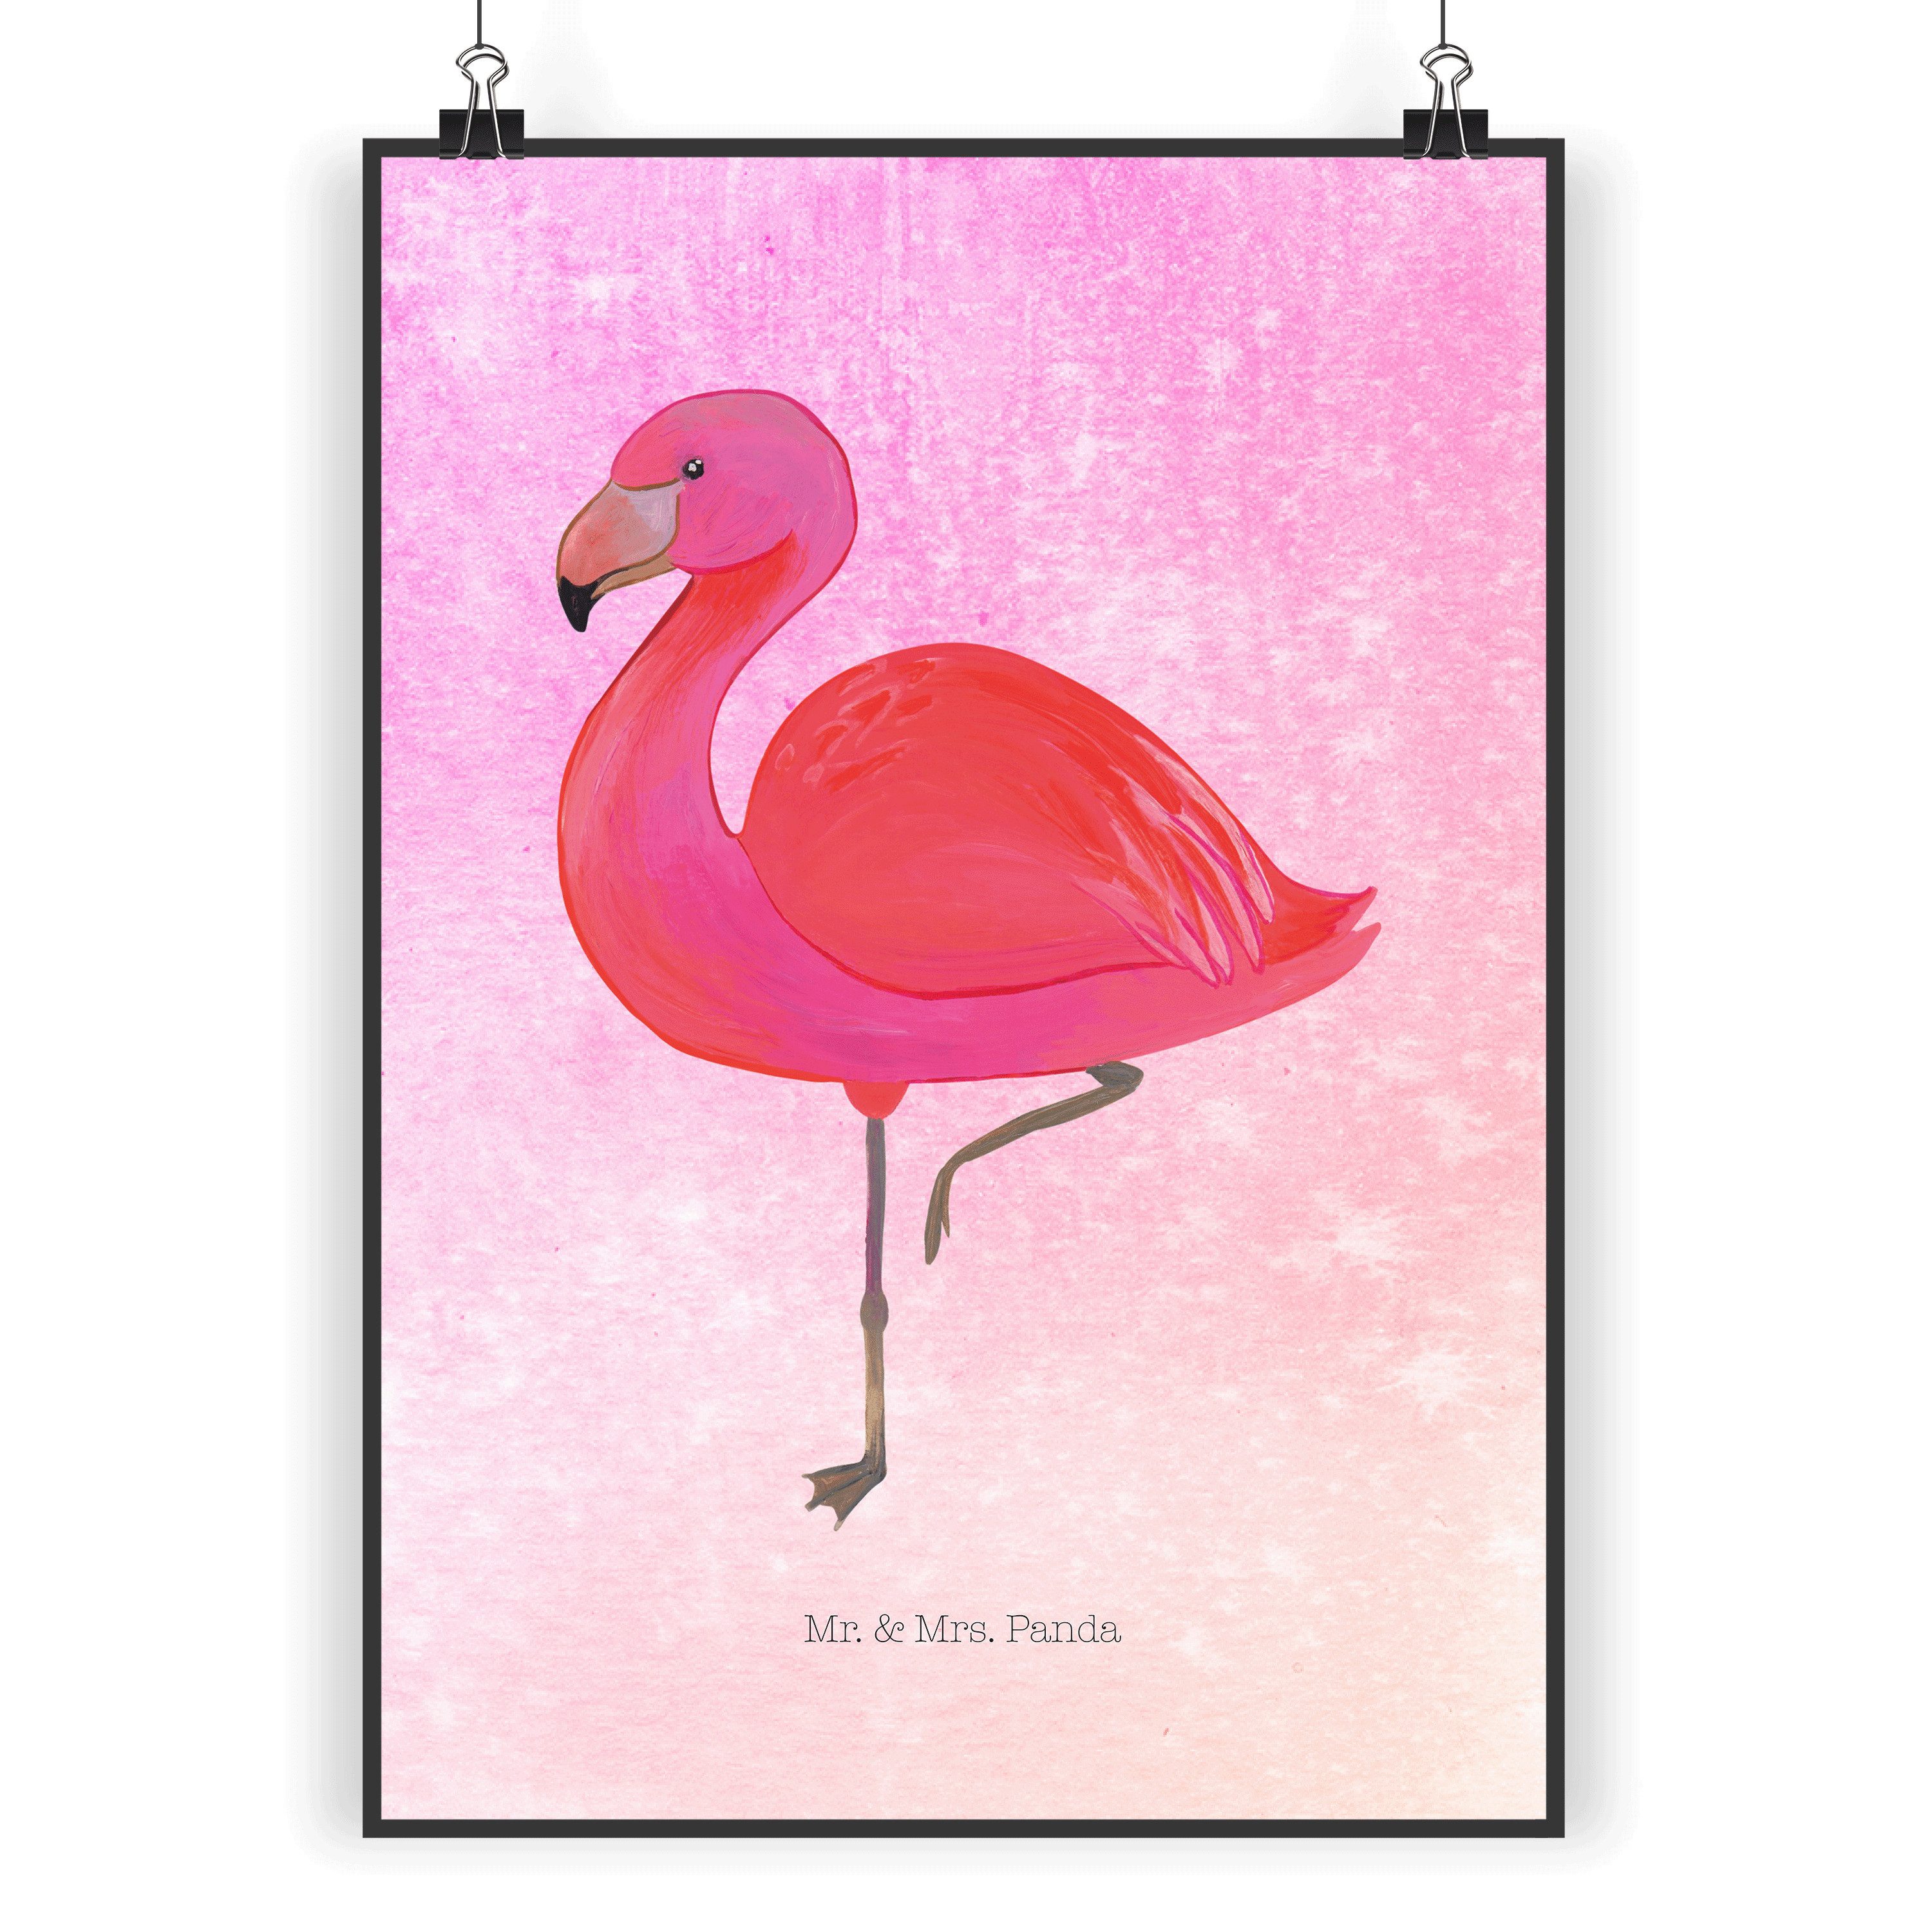 Mr. & Mrs. Panda Poster DIN A3 Flamingo Classic - Aquarell Pink - Geschenk, Wanddeko, stolz, Flamingo classic (1 St), Lebensfrohes Design